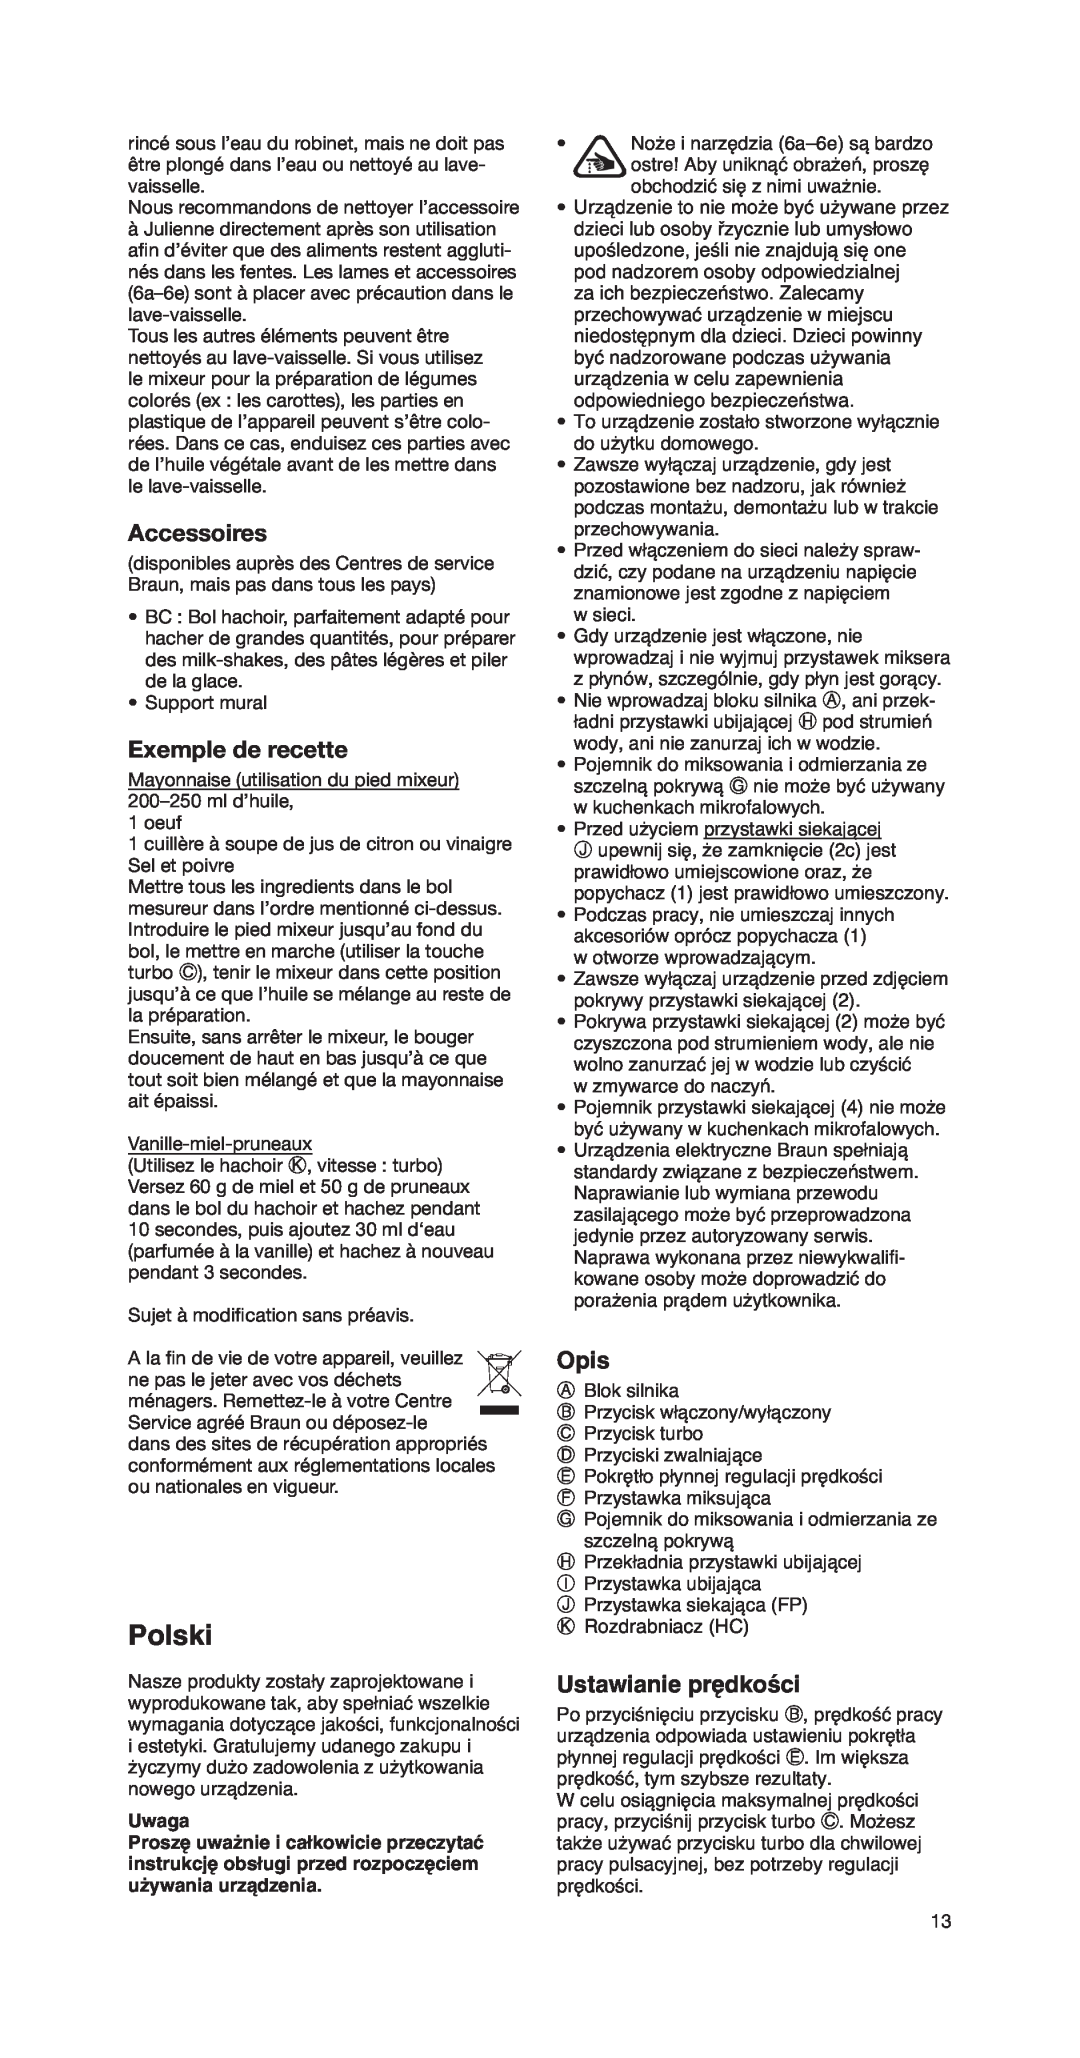 Braun MR 550 Buffet manual Polski, Accessoires, Exemple de recette, Opis, Ustawianie prędkości, Uwaga 